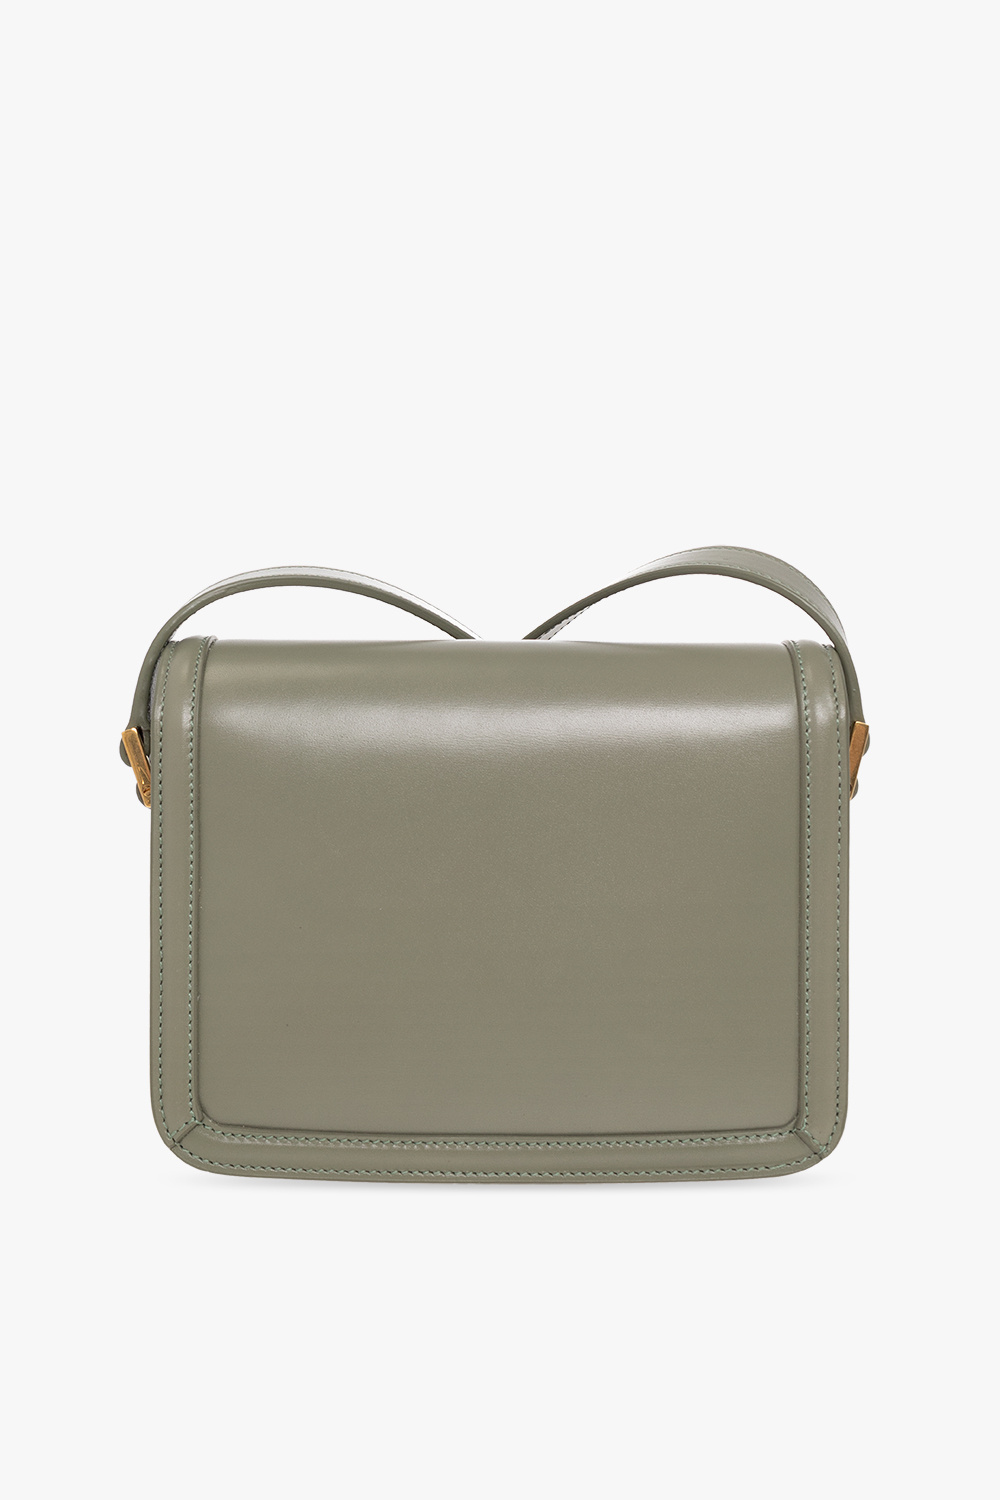 Saint Laurent ‘Solferino Small’ shoulder bag